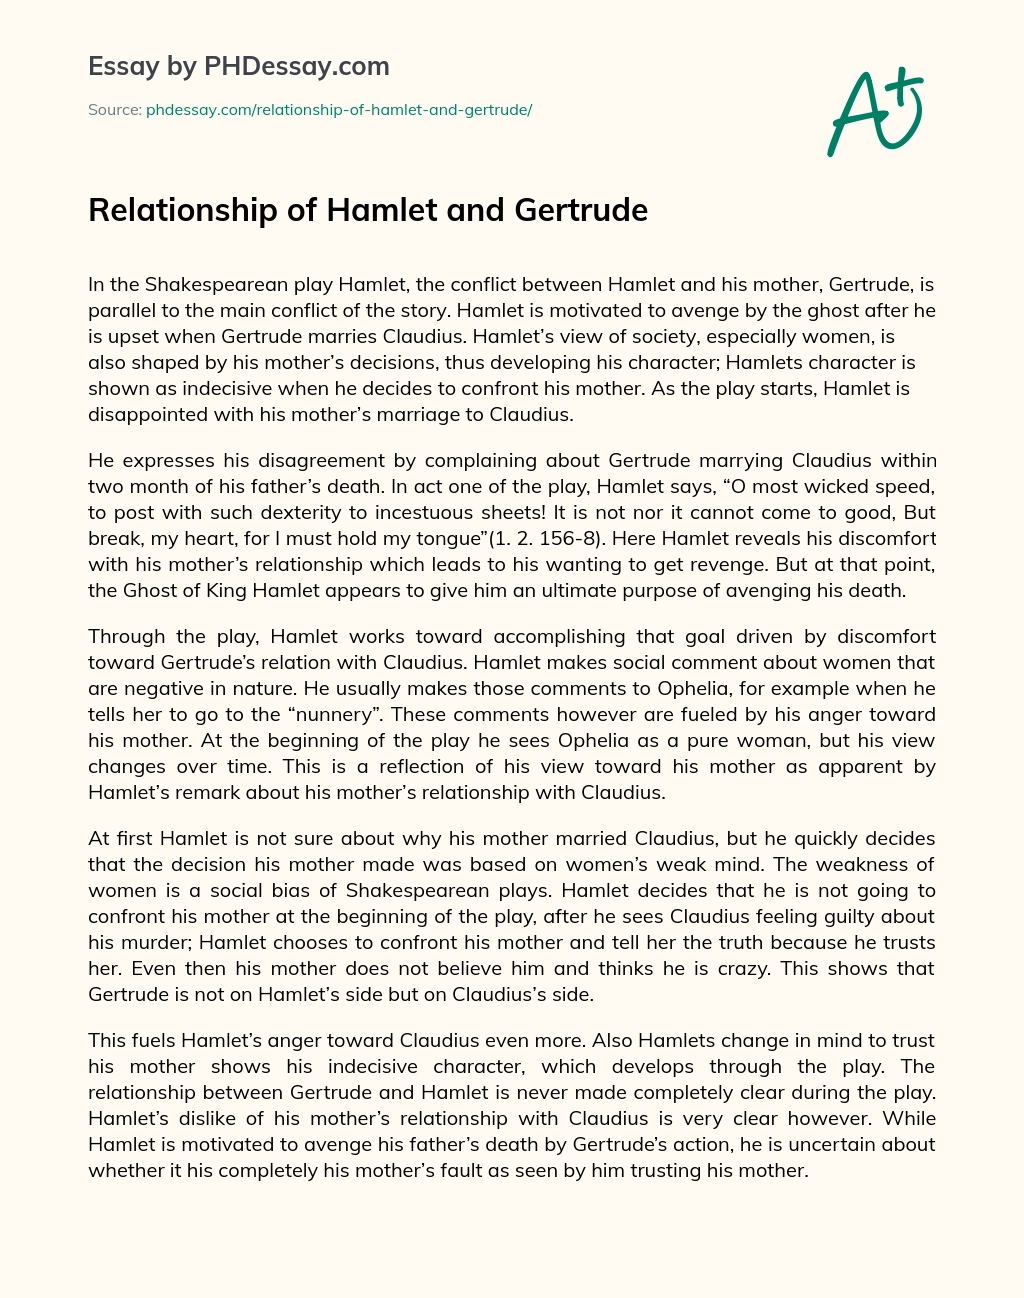 Relationship of Hamlet and Gertrude essay